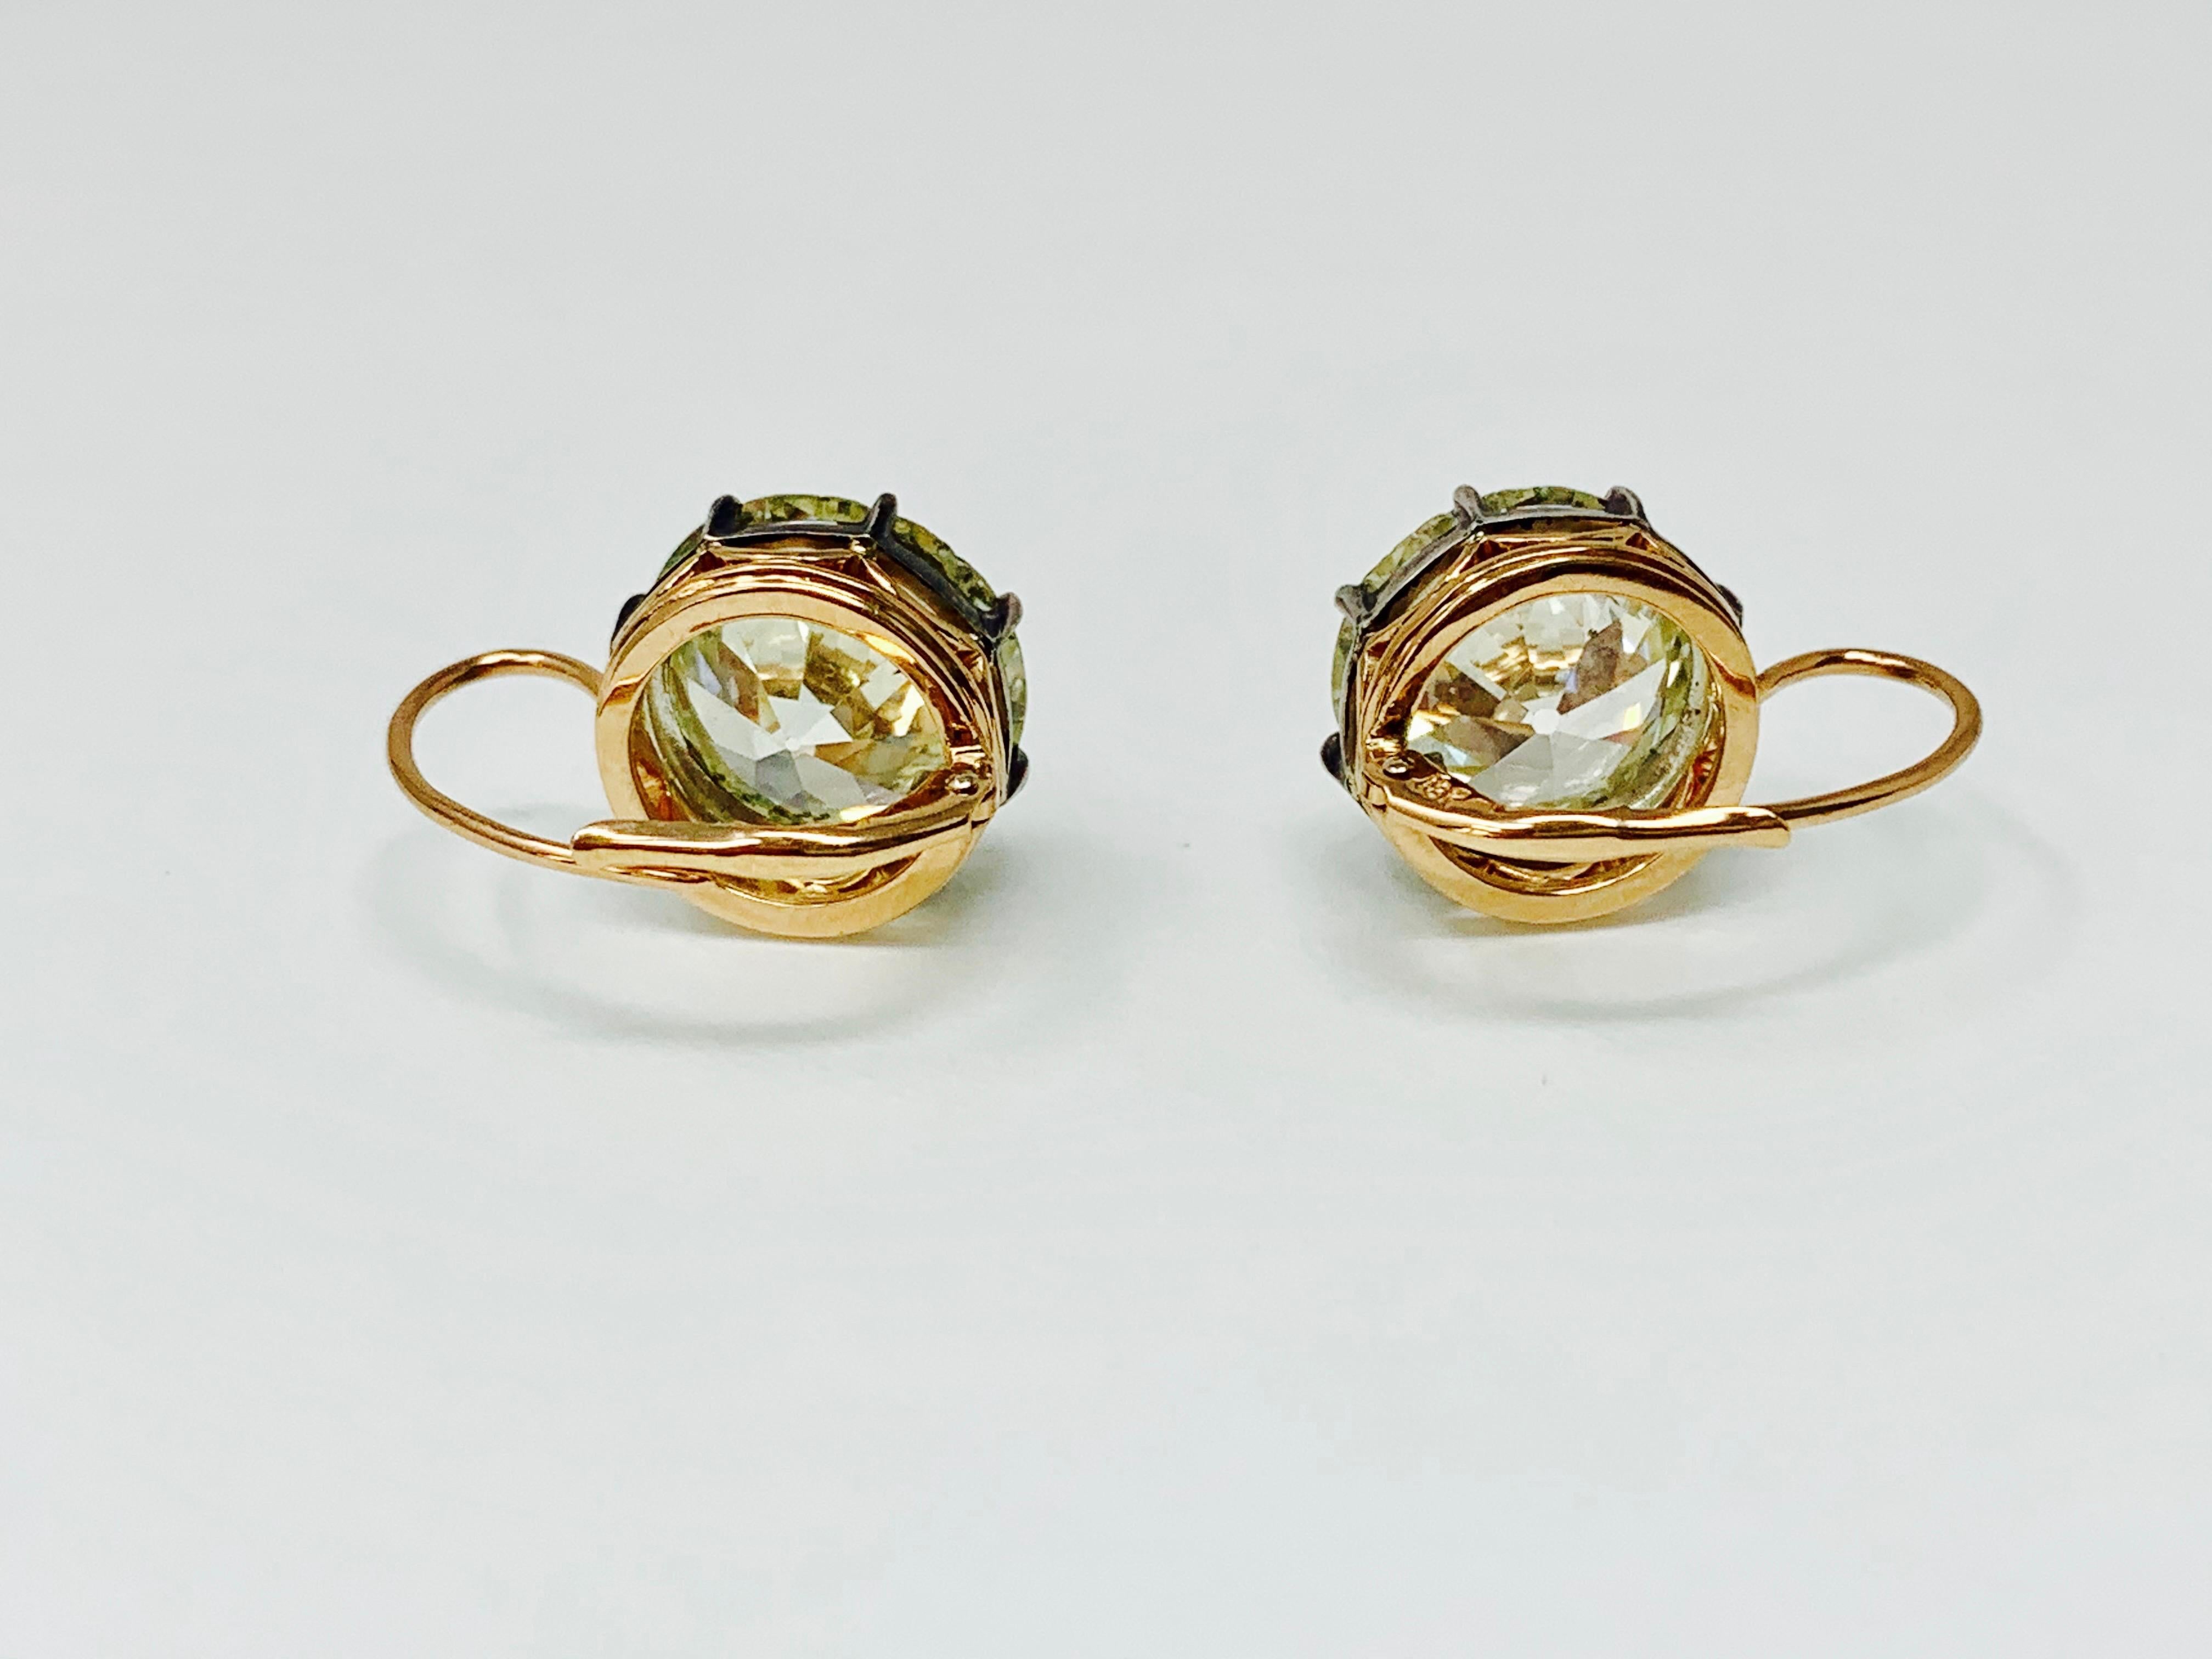 16.28 Carat Antique Style Old European Diamond Drop Earrings in Rose Gold 1